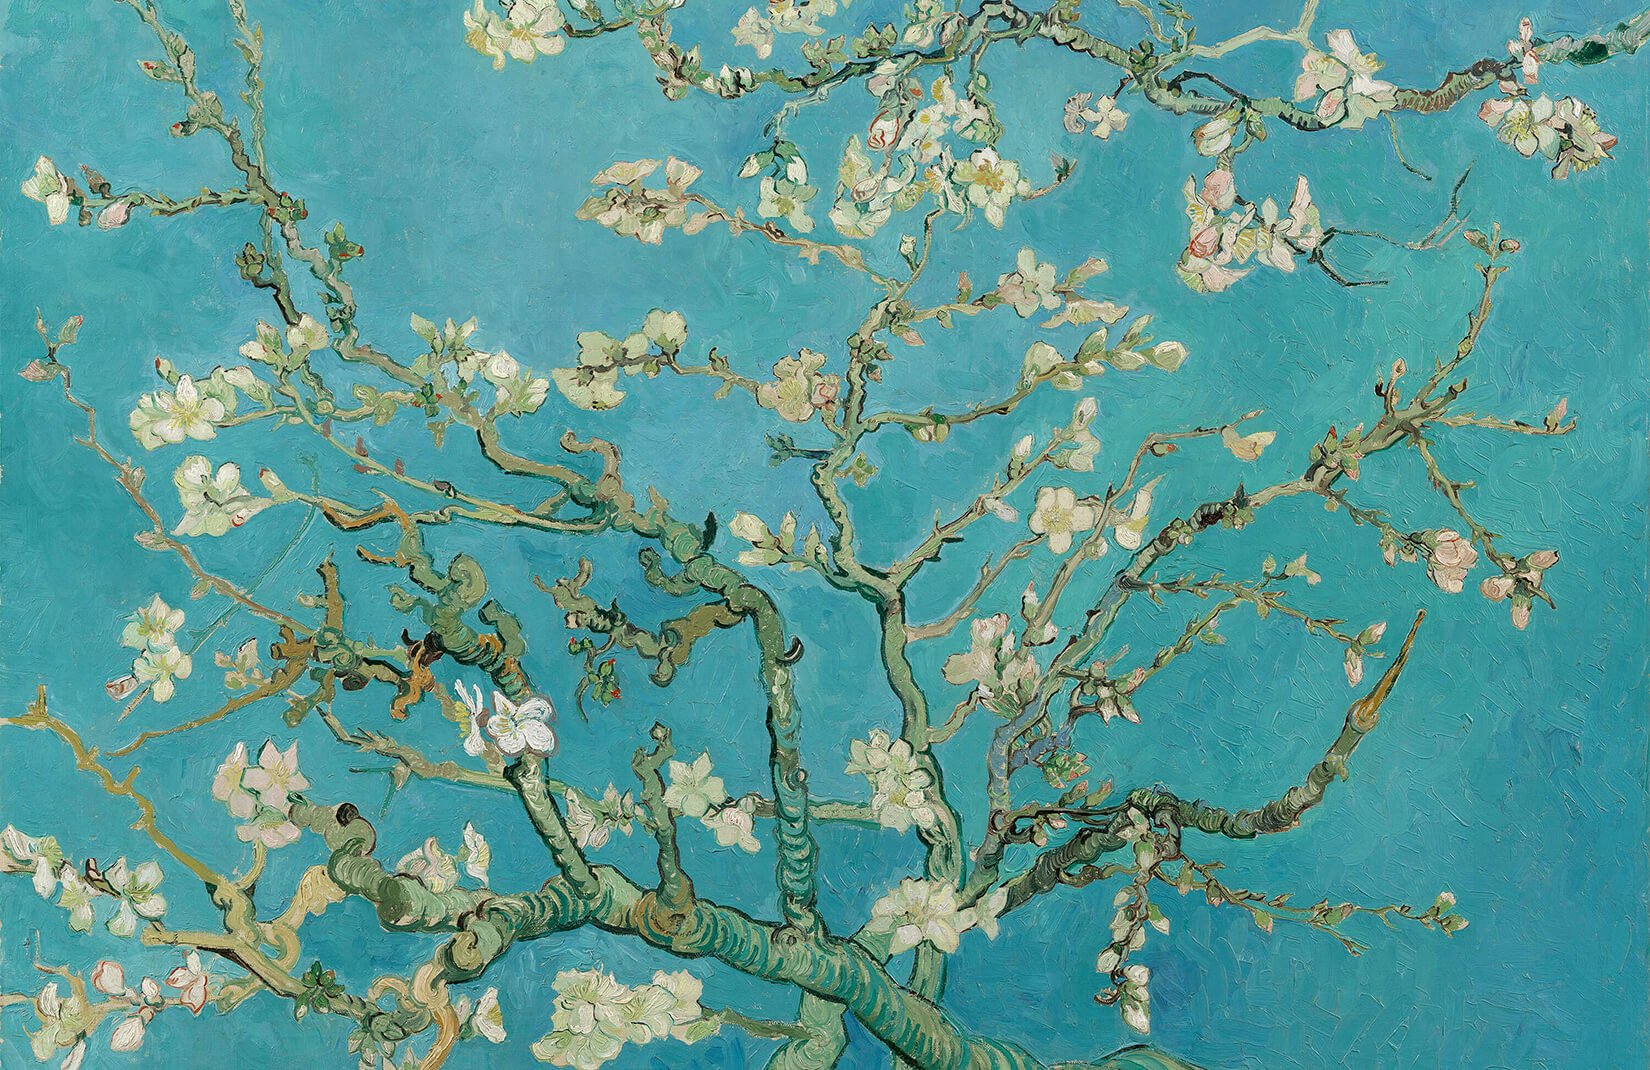 van gogh wallpaper,aqua,blue,branch,turquoise,tree